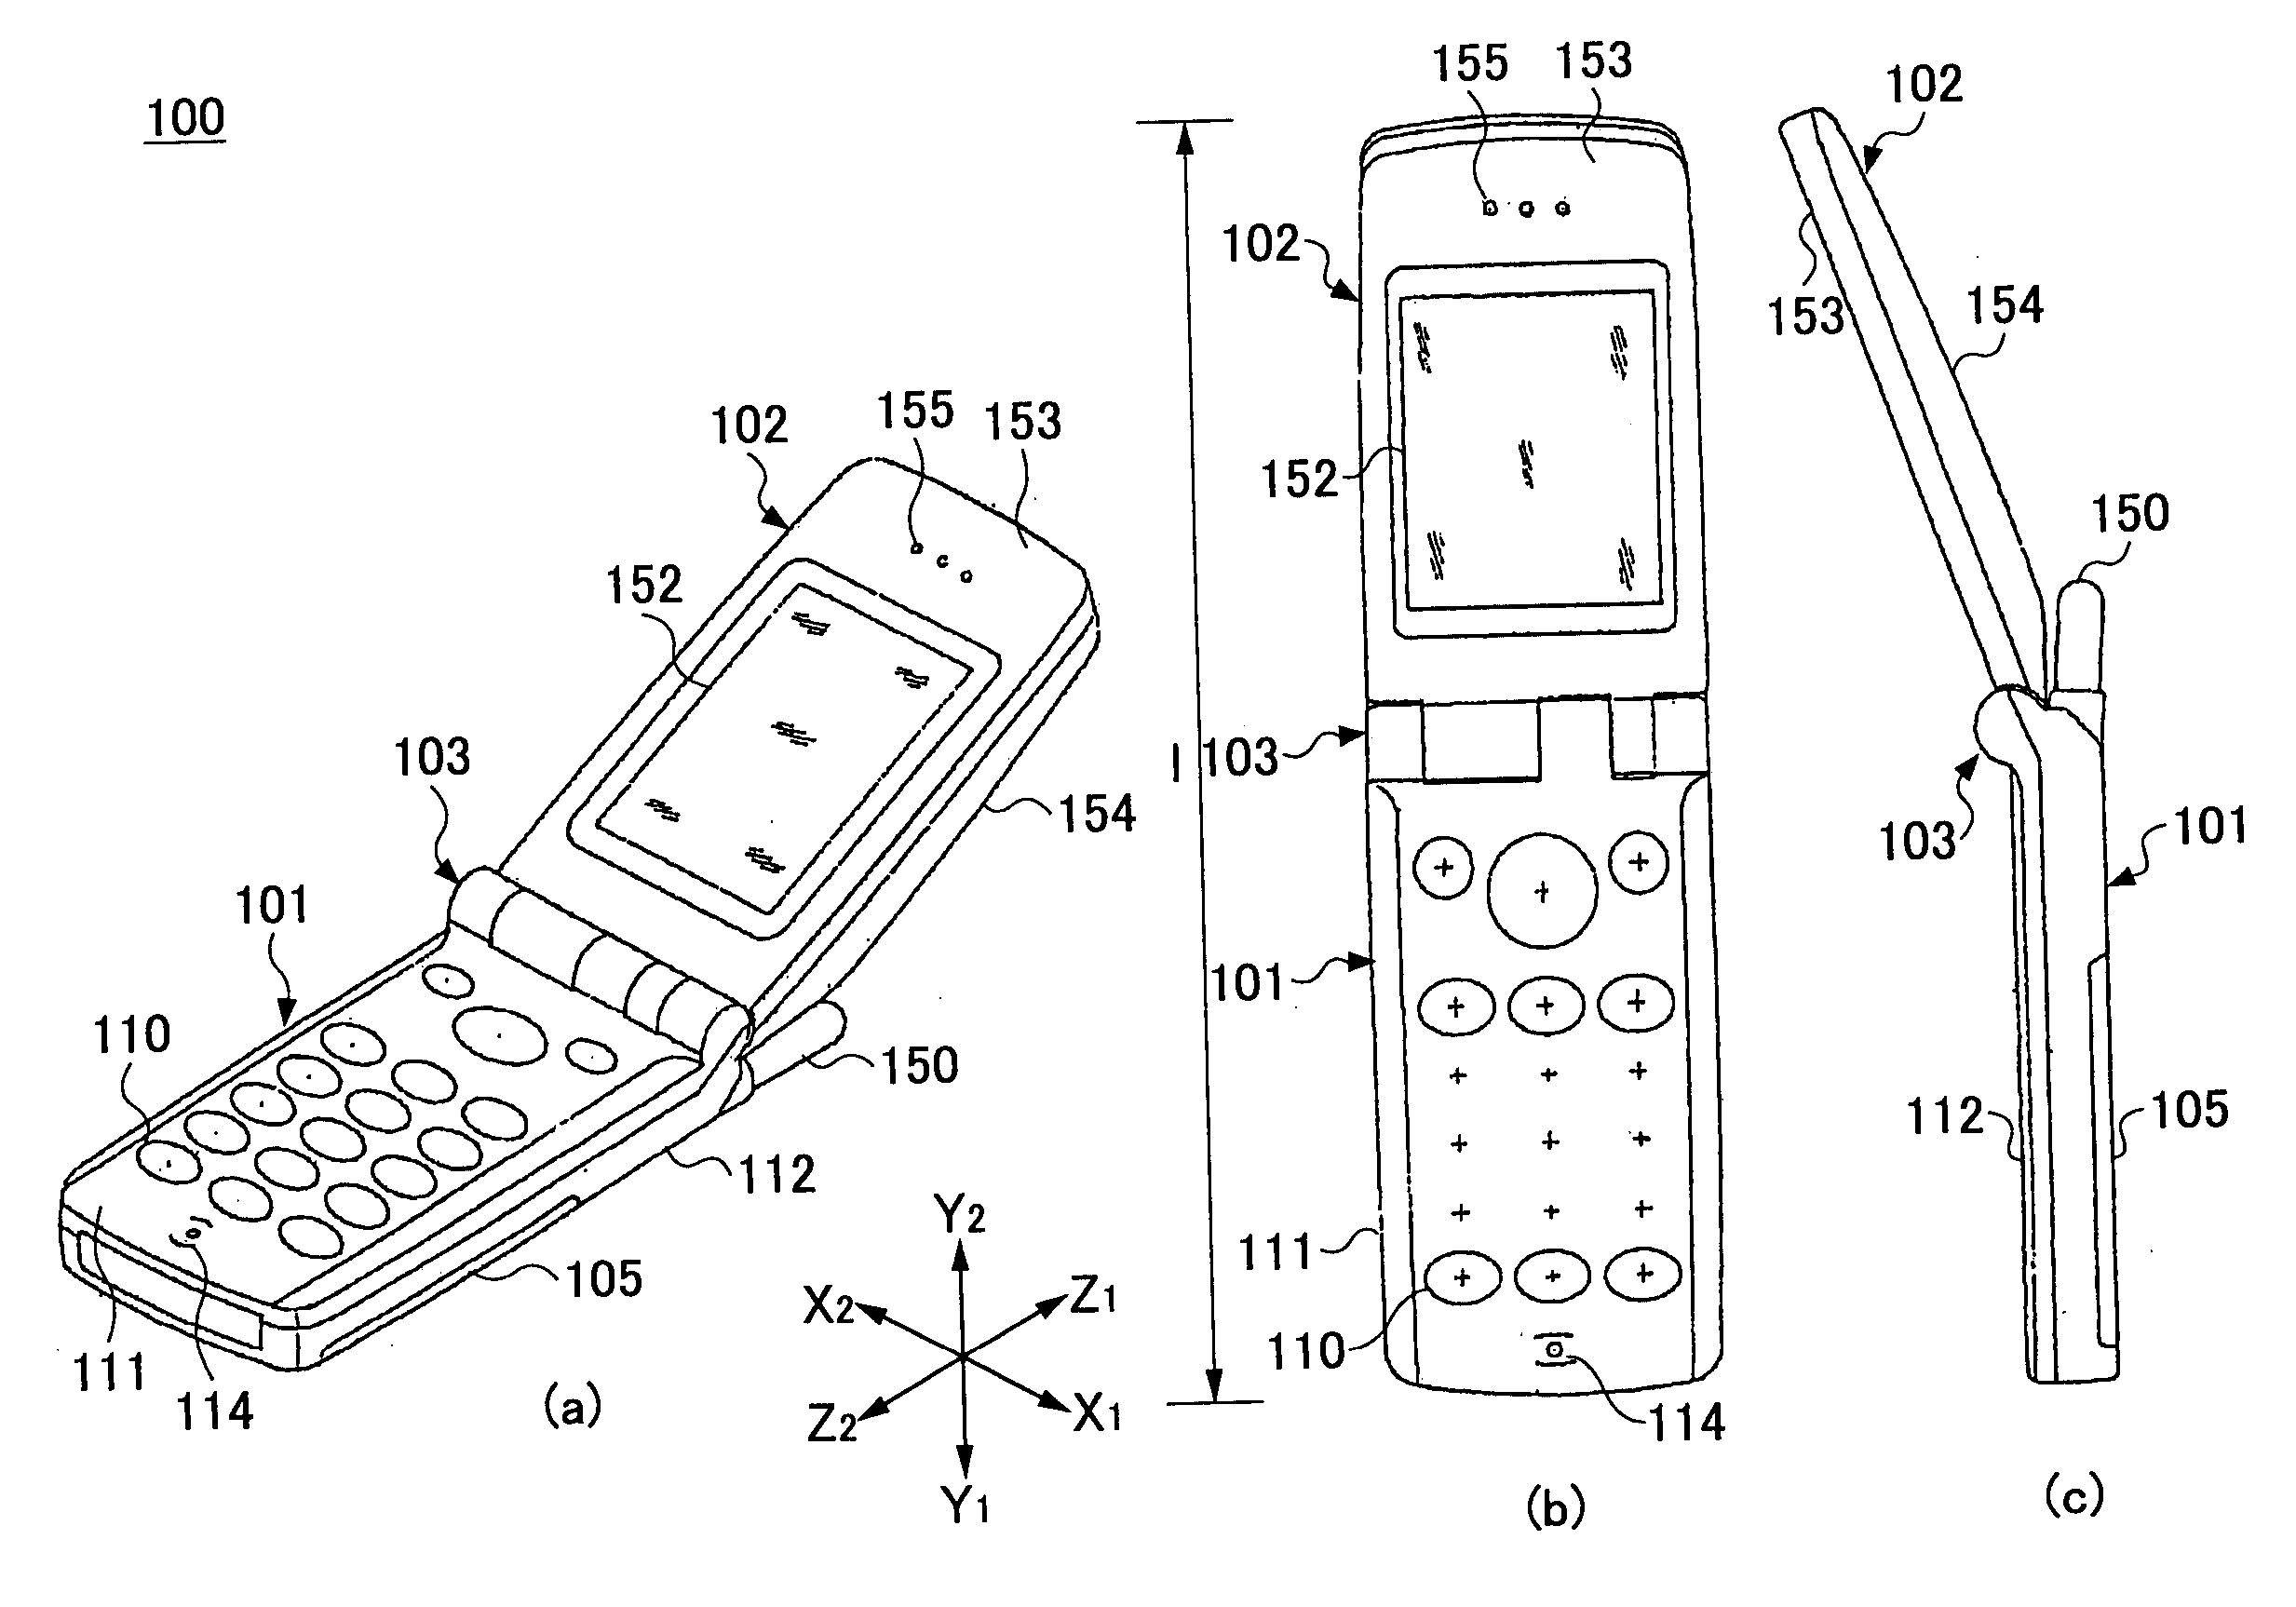 Folding type portable radio machine and chassis of the radio machine